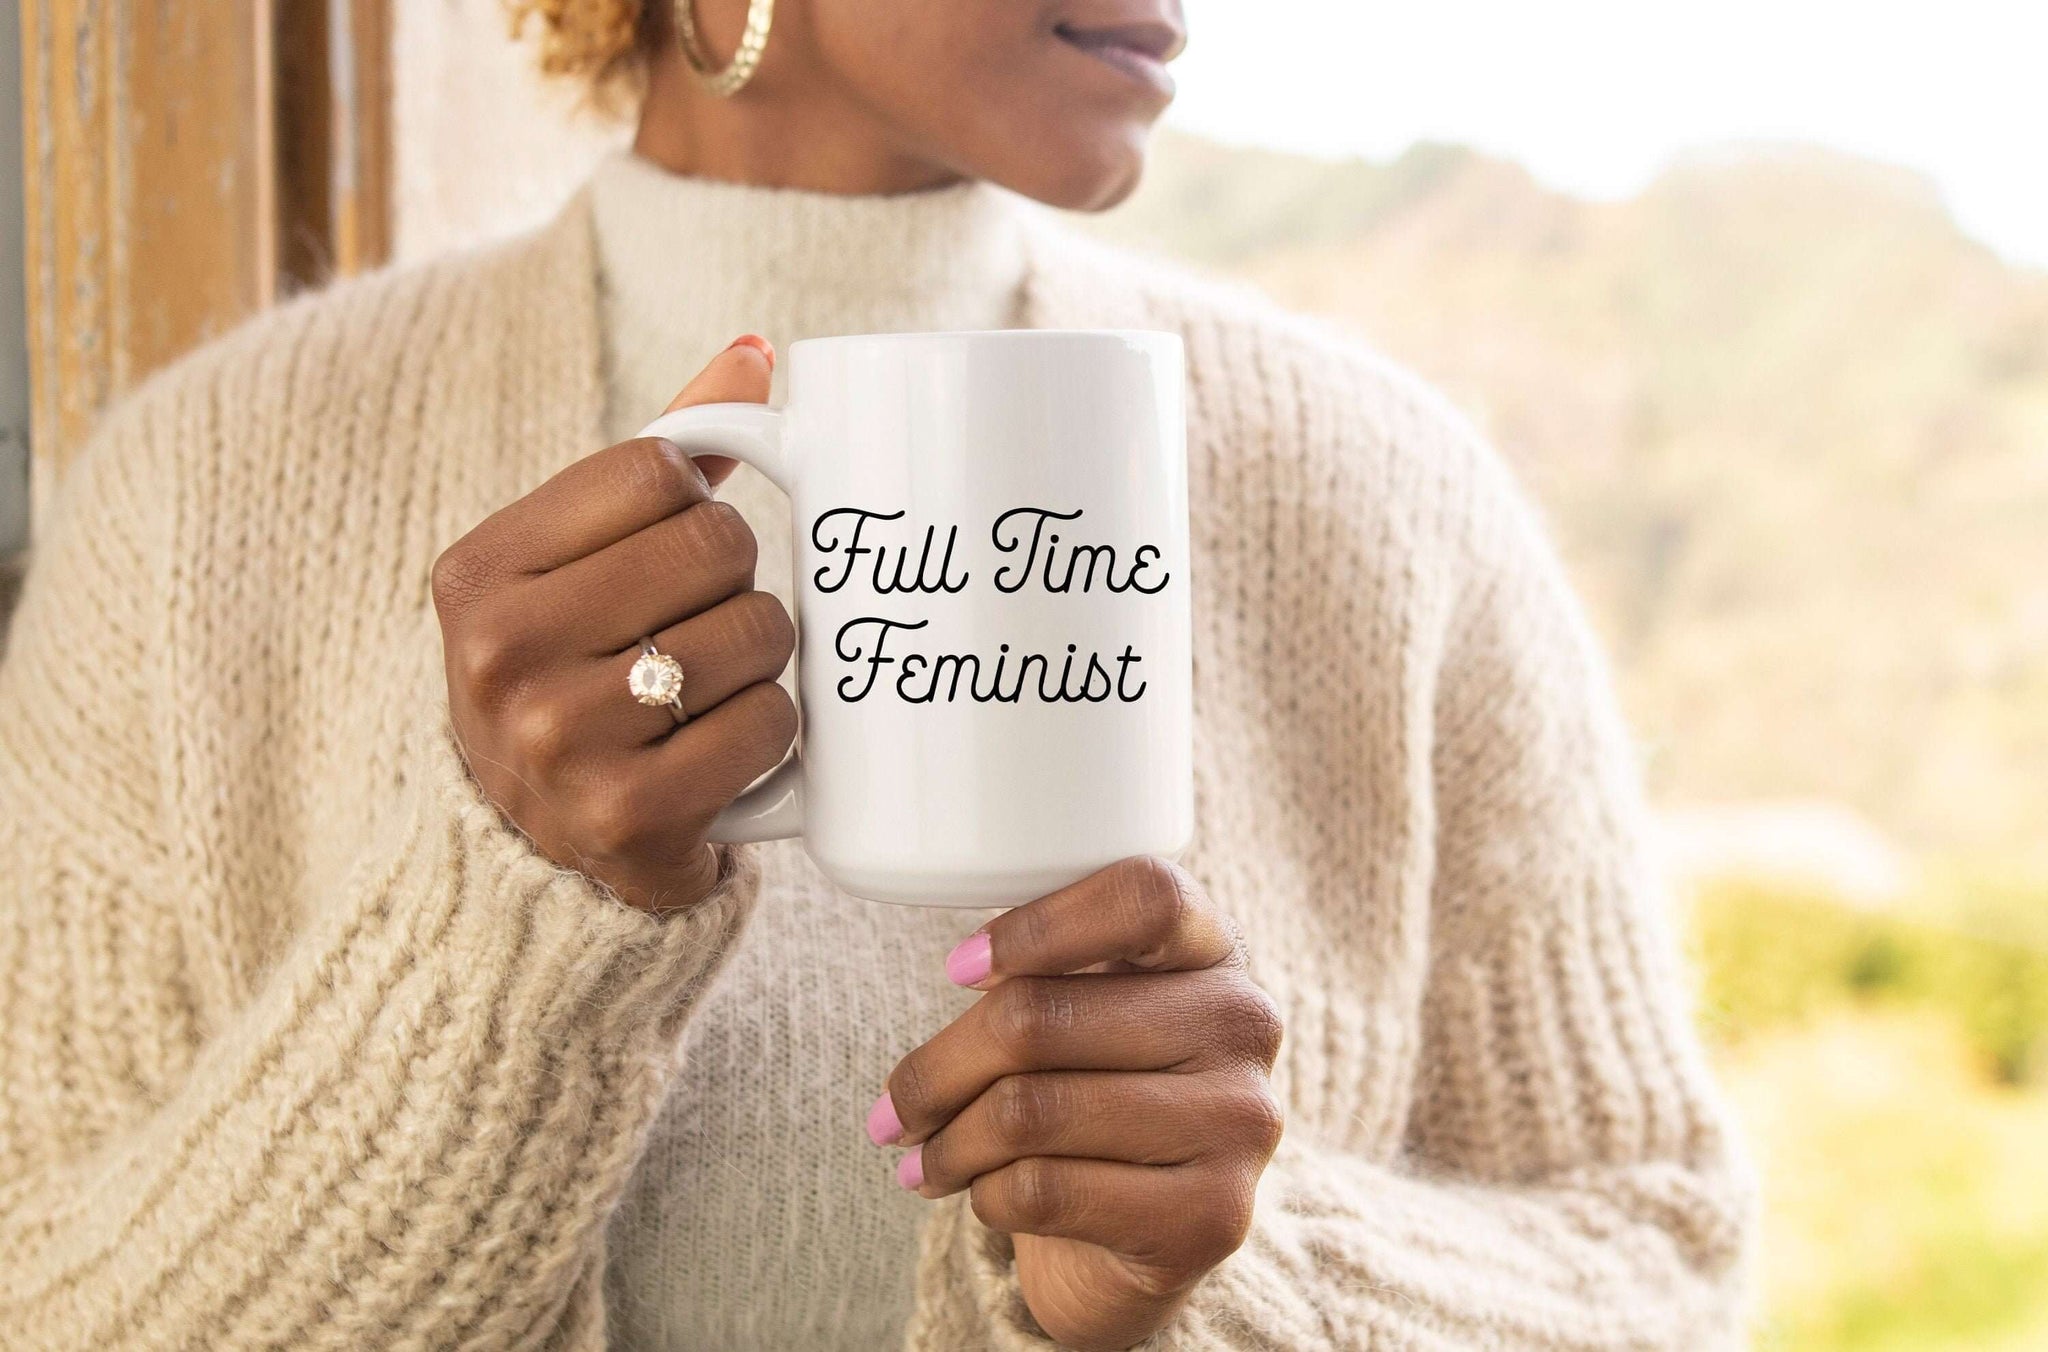 Full Time Feminist Mug - Send Me a Dream